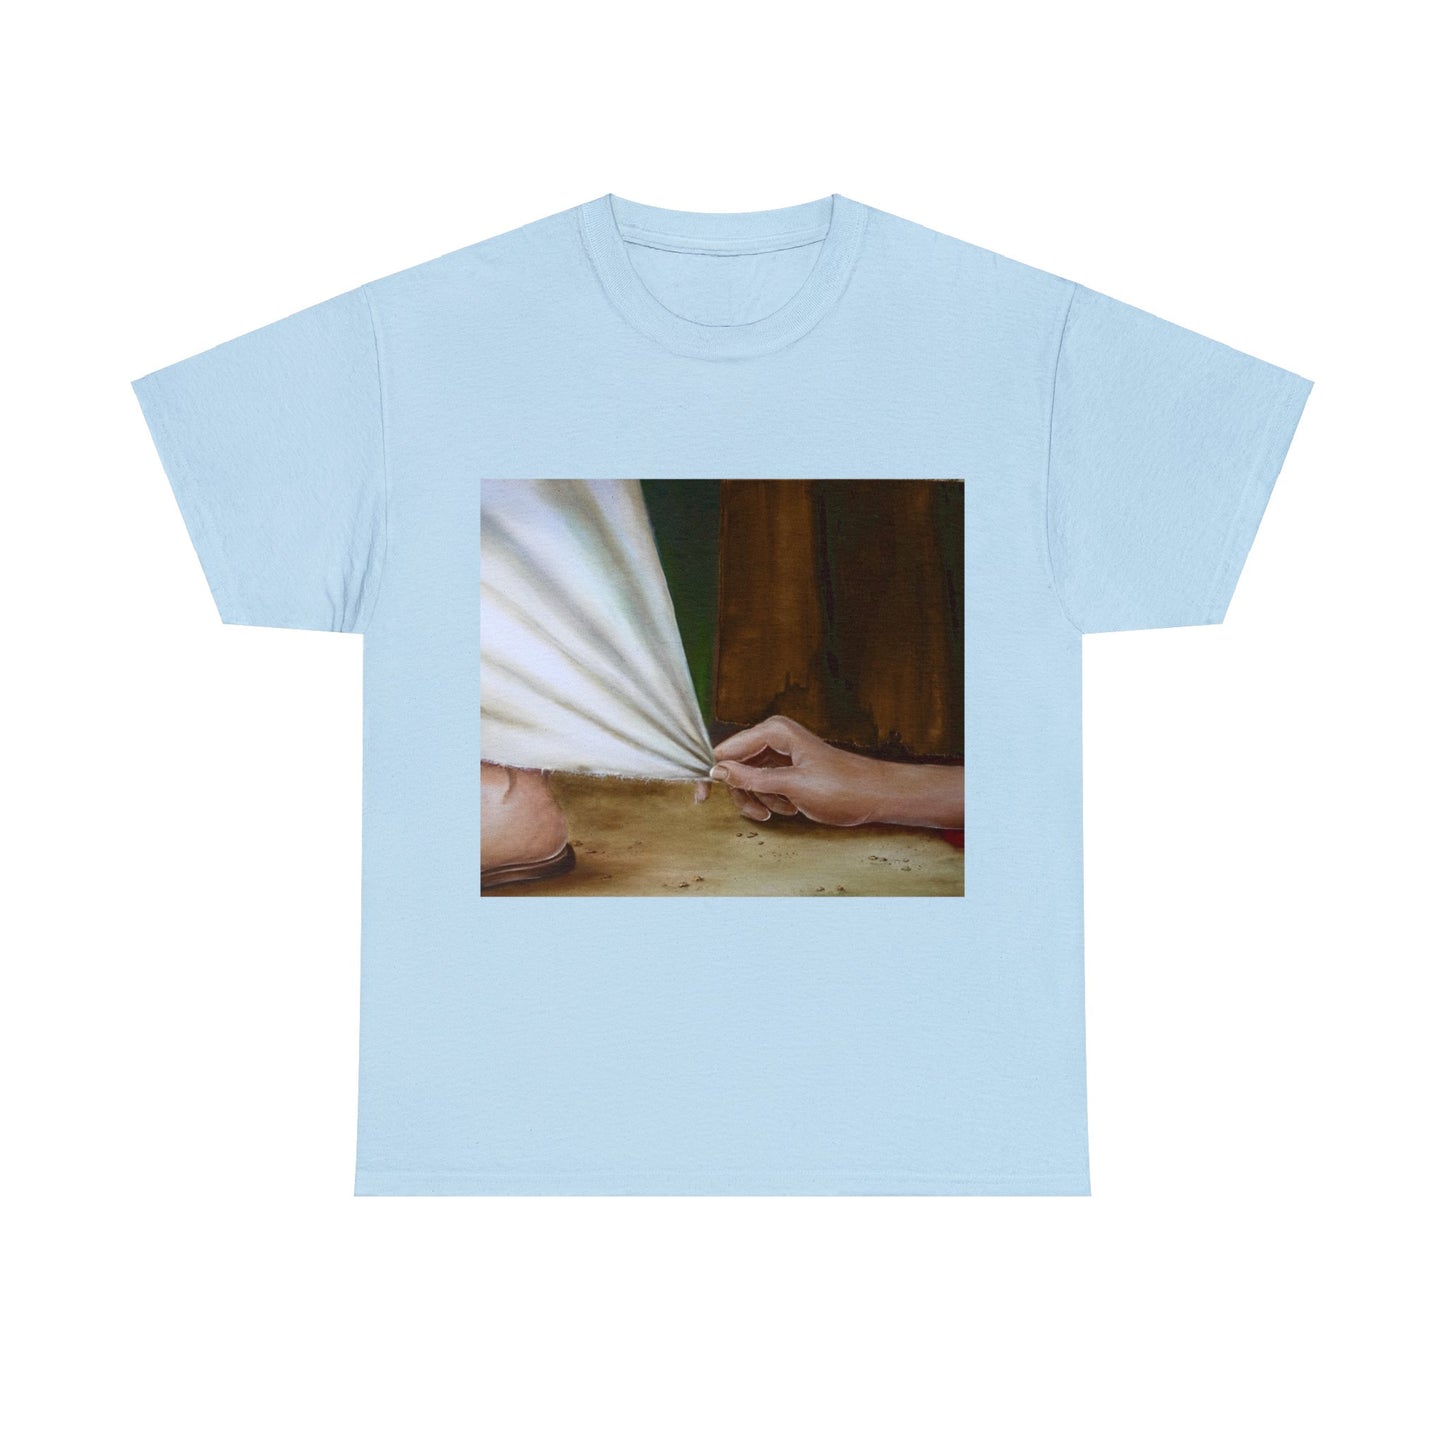 The Healing Touch t-shirt